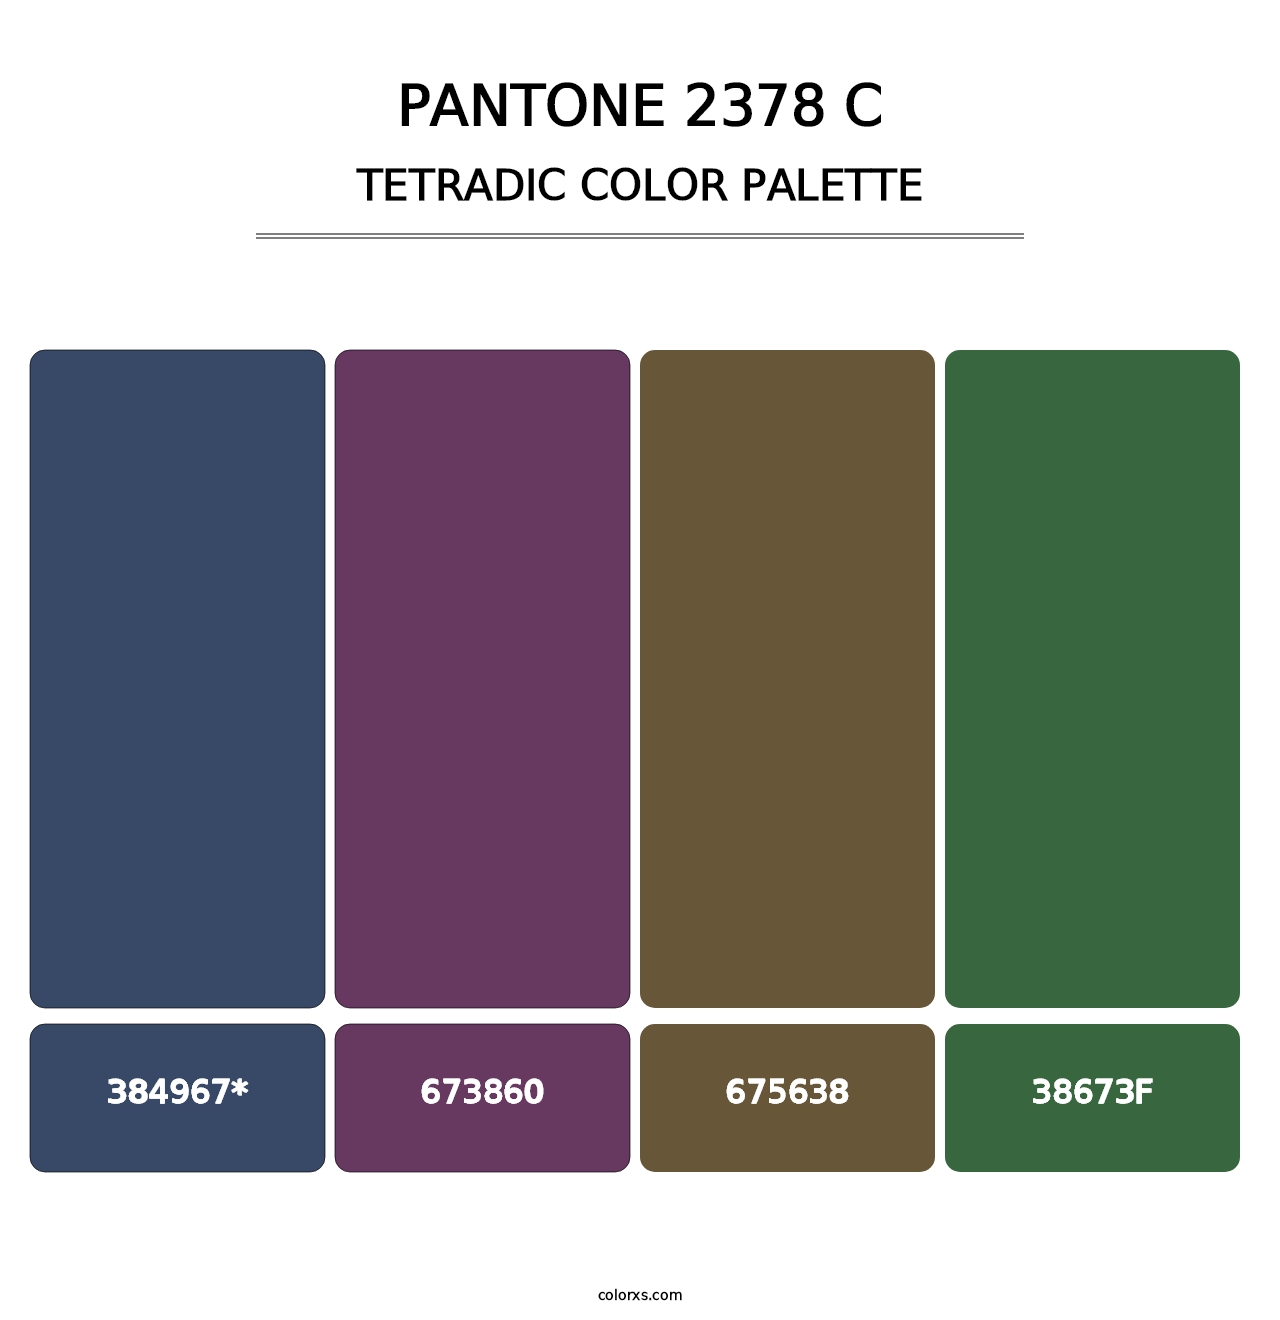 PANTONE 2378 C - Tetradic Color Palette